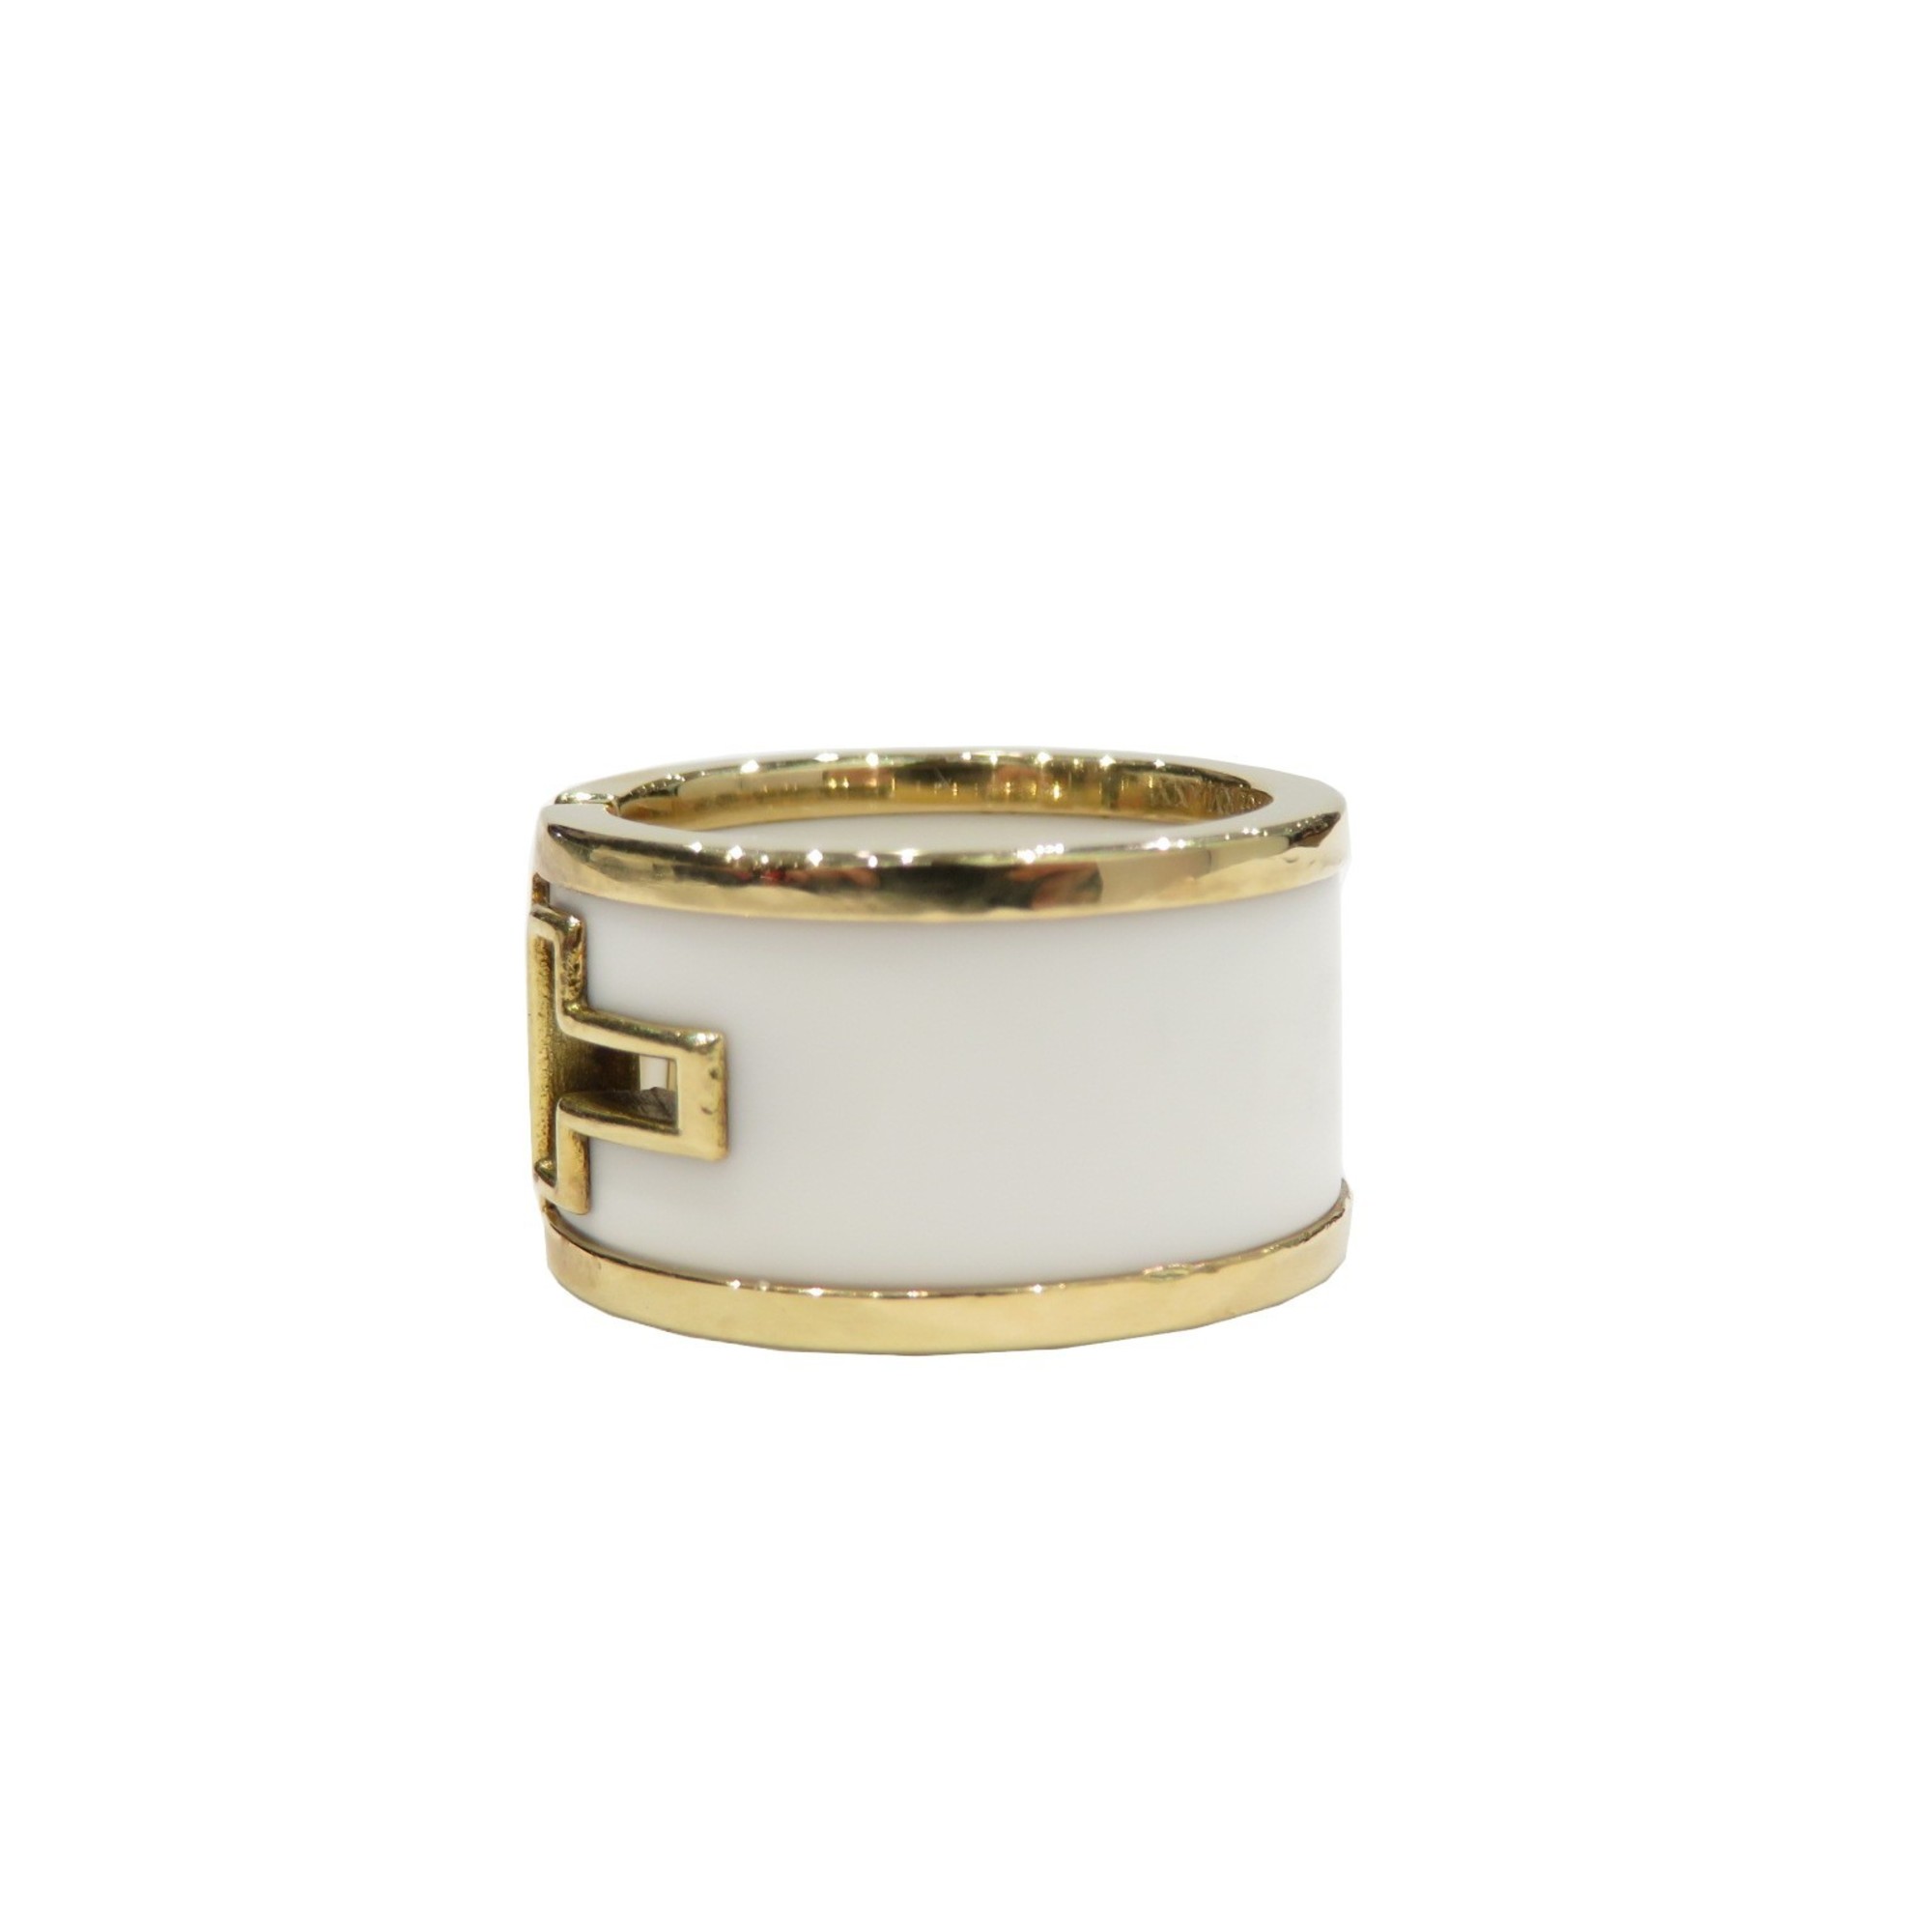 TIFFANY & CO. T-Cutout Ring, 18K Yellow Gold x White Ceramic, Size 6.5, 8.5g